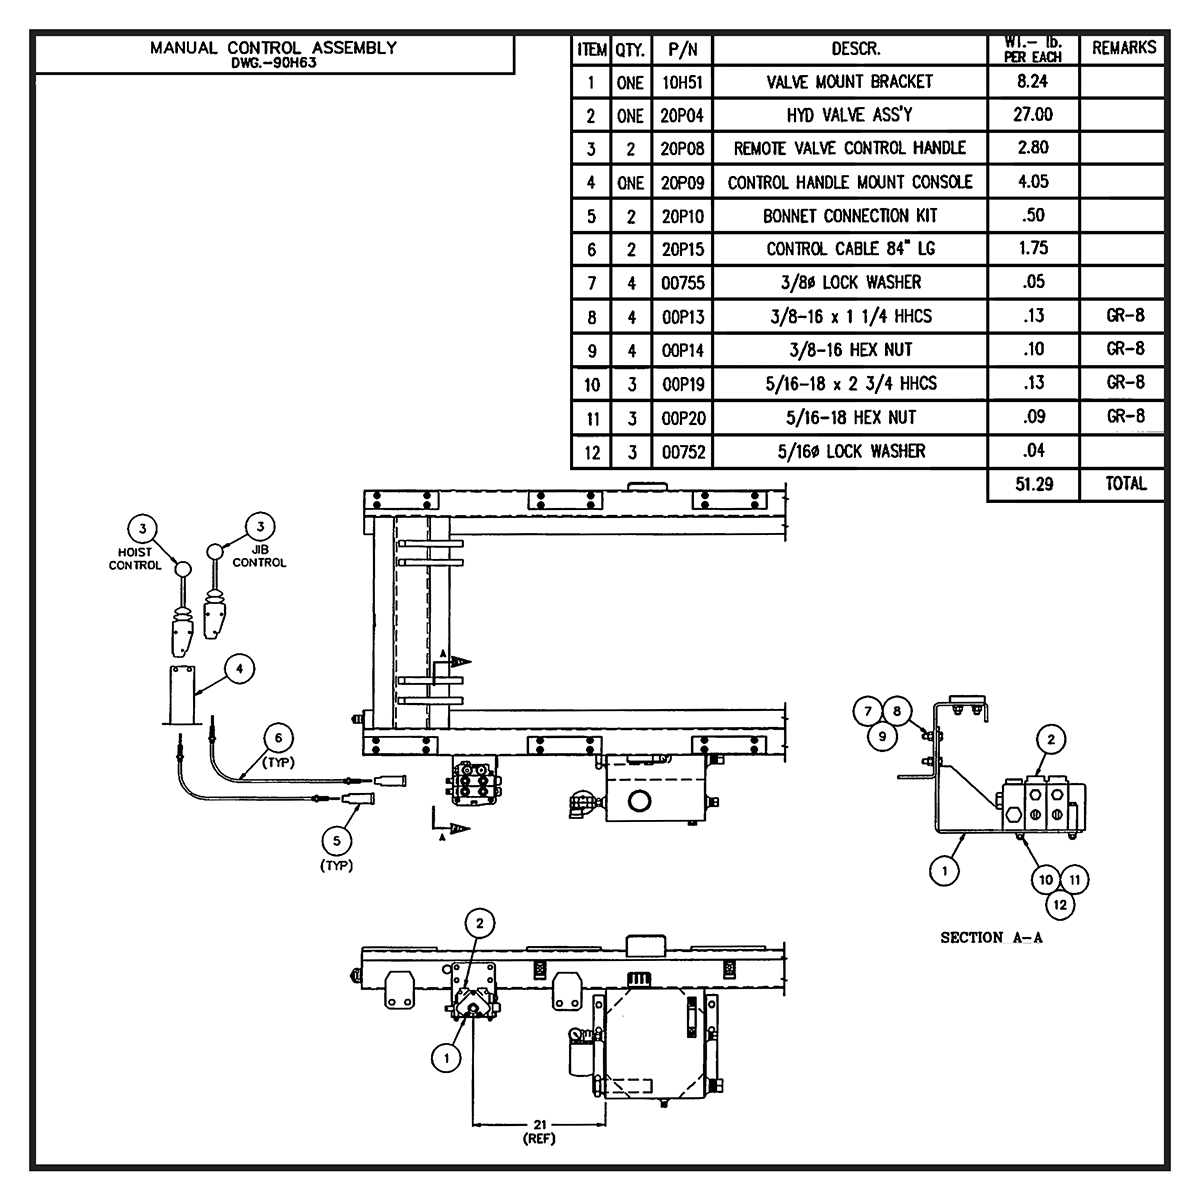 Swaploader SL-125 Main Control Assembly Diagram